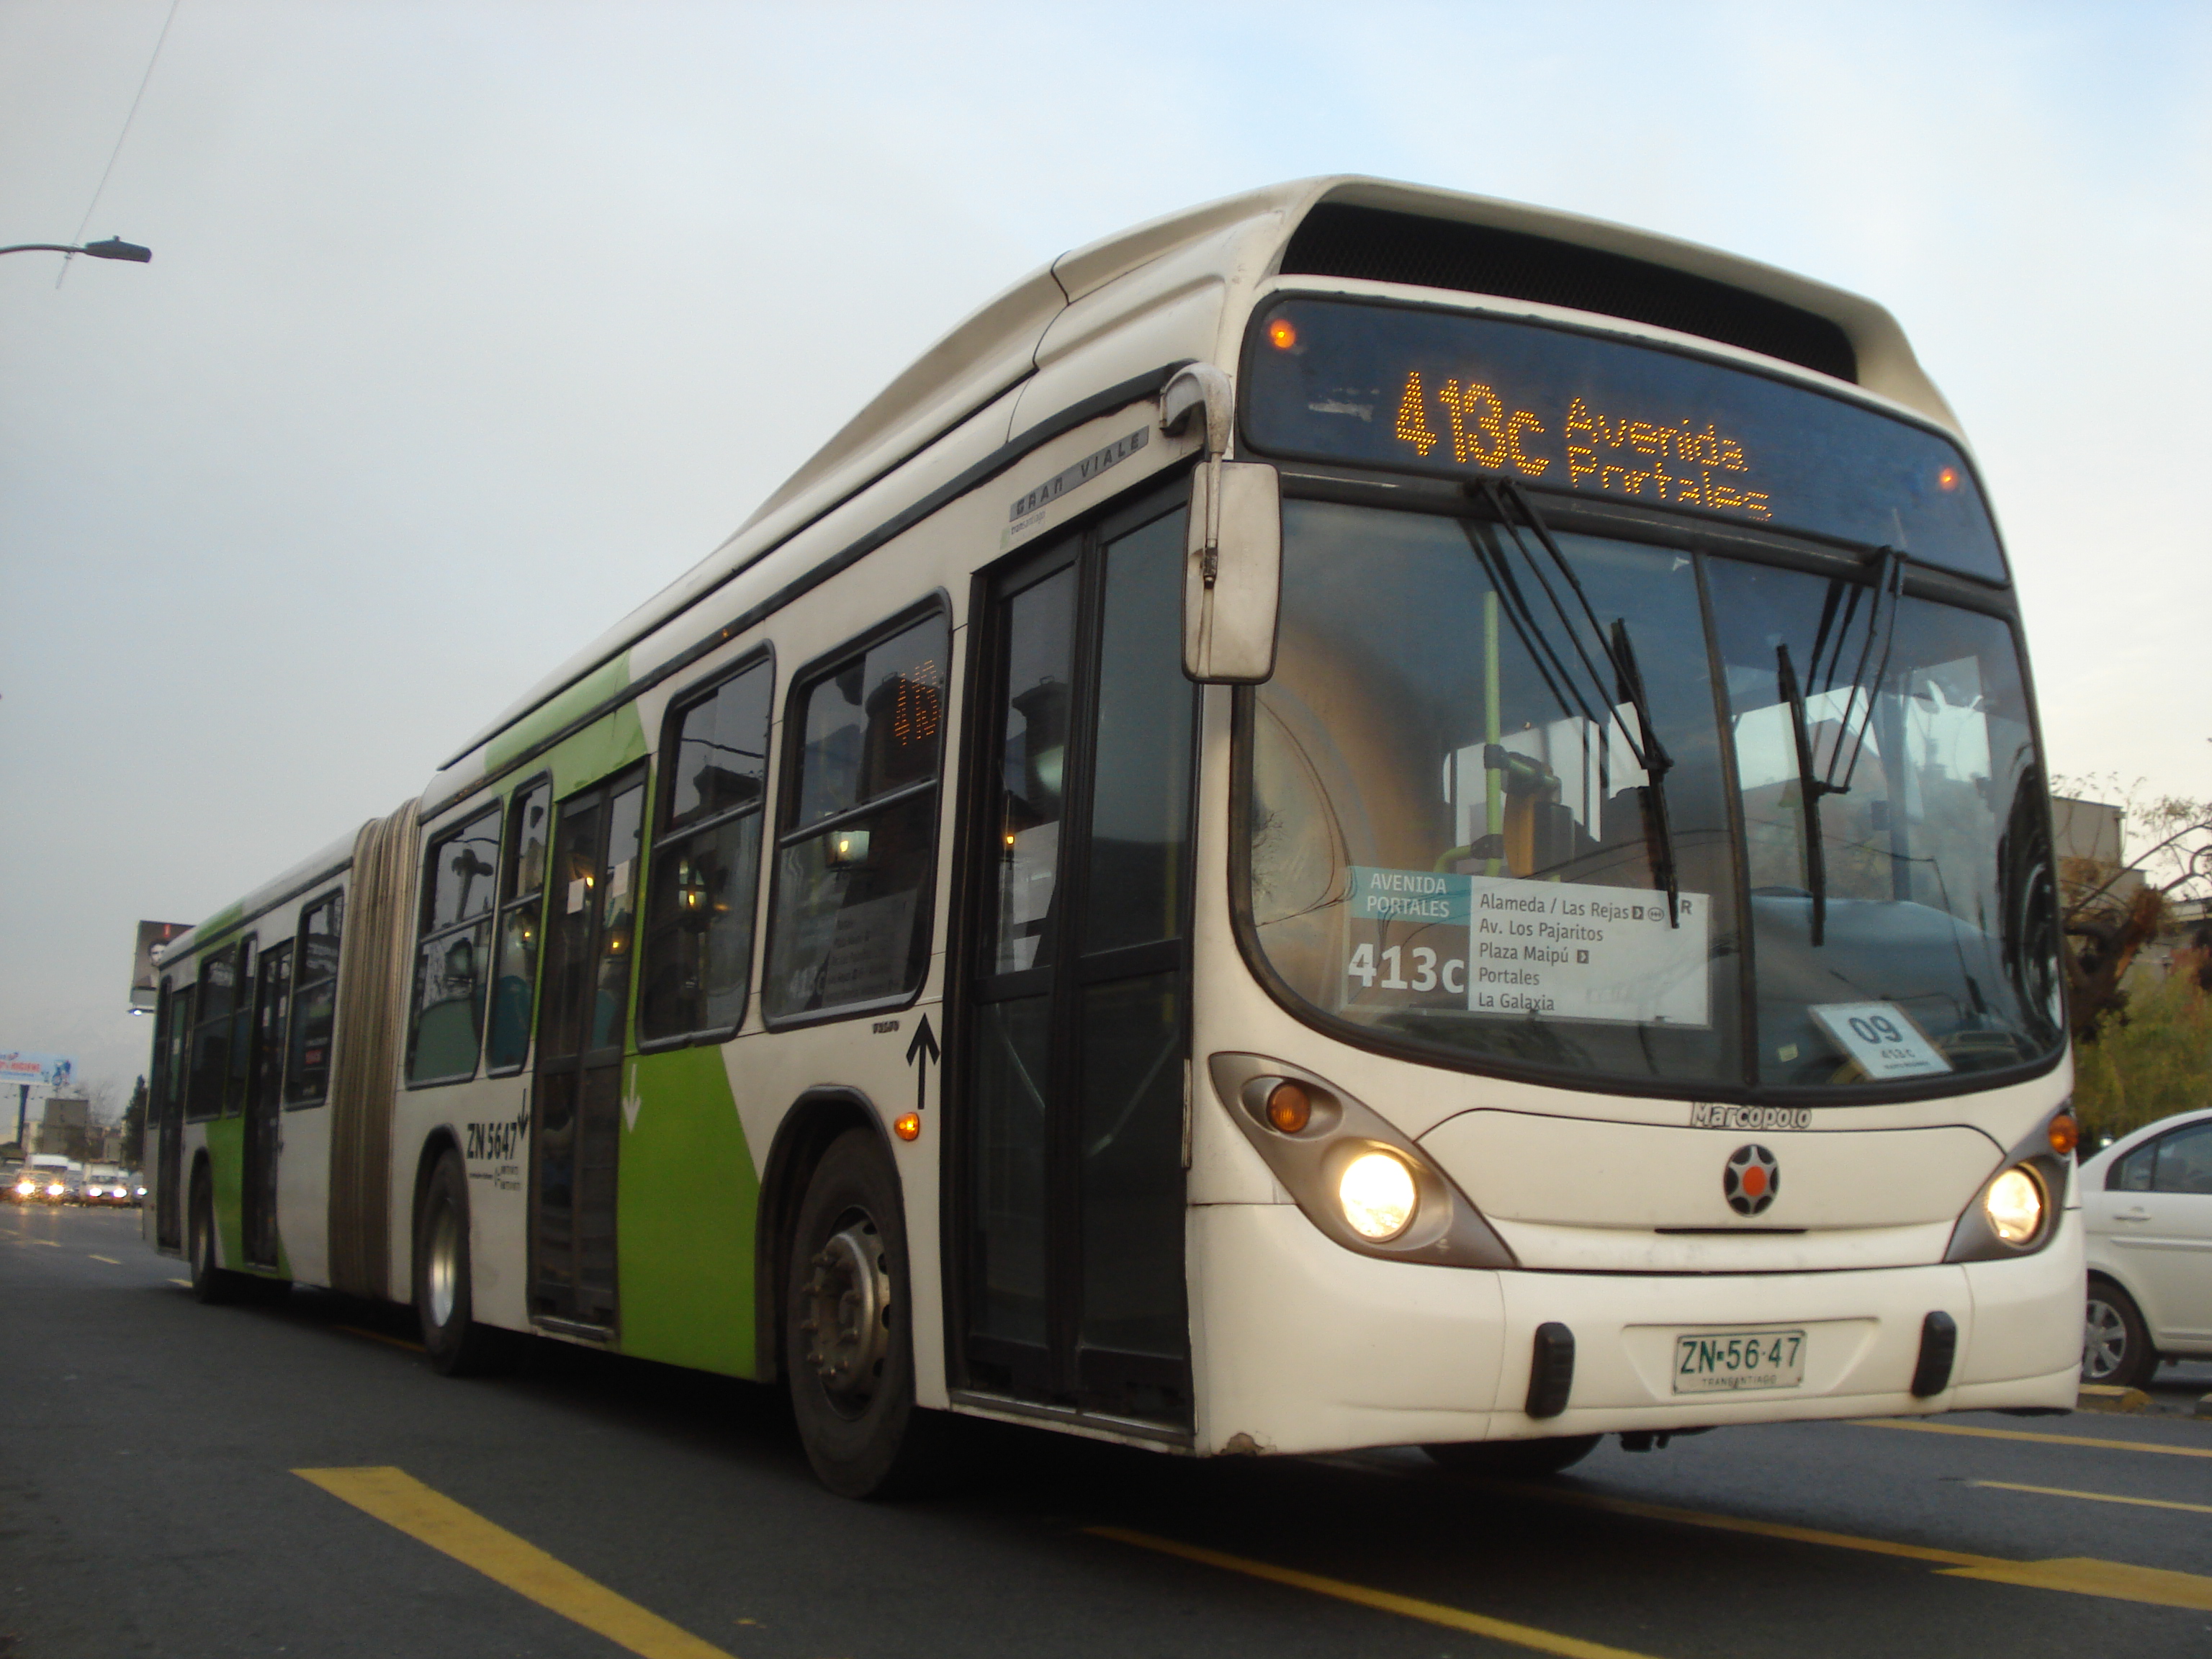 File:Marcopolo Gran Viale bus in Santiago de Chile (413c).jpg ...